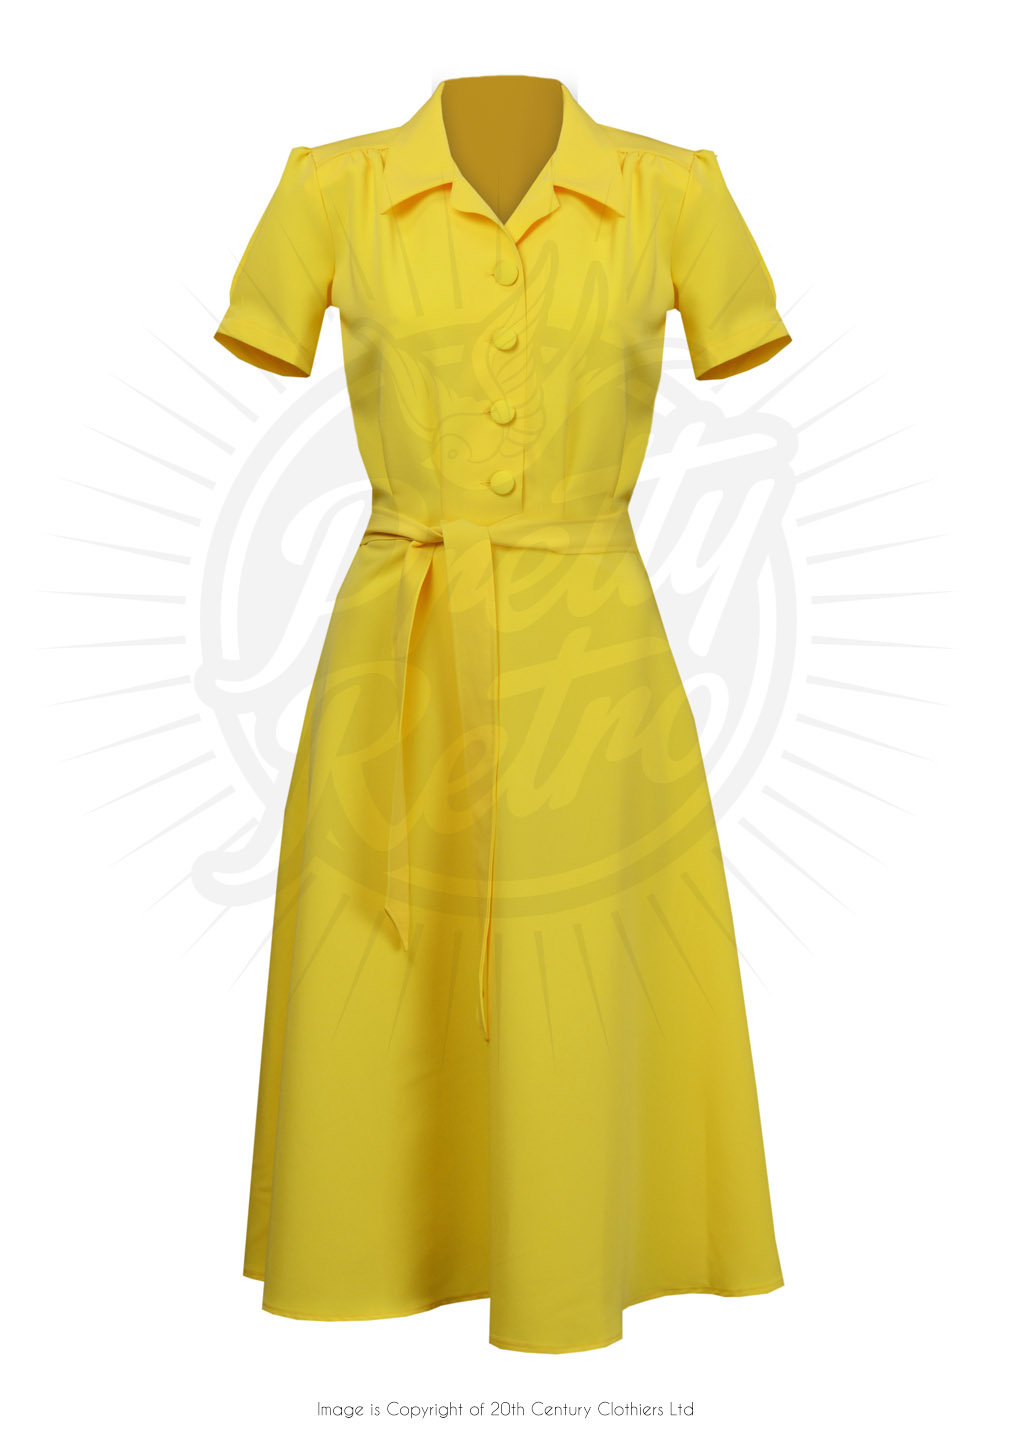 1940s yellow dress